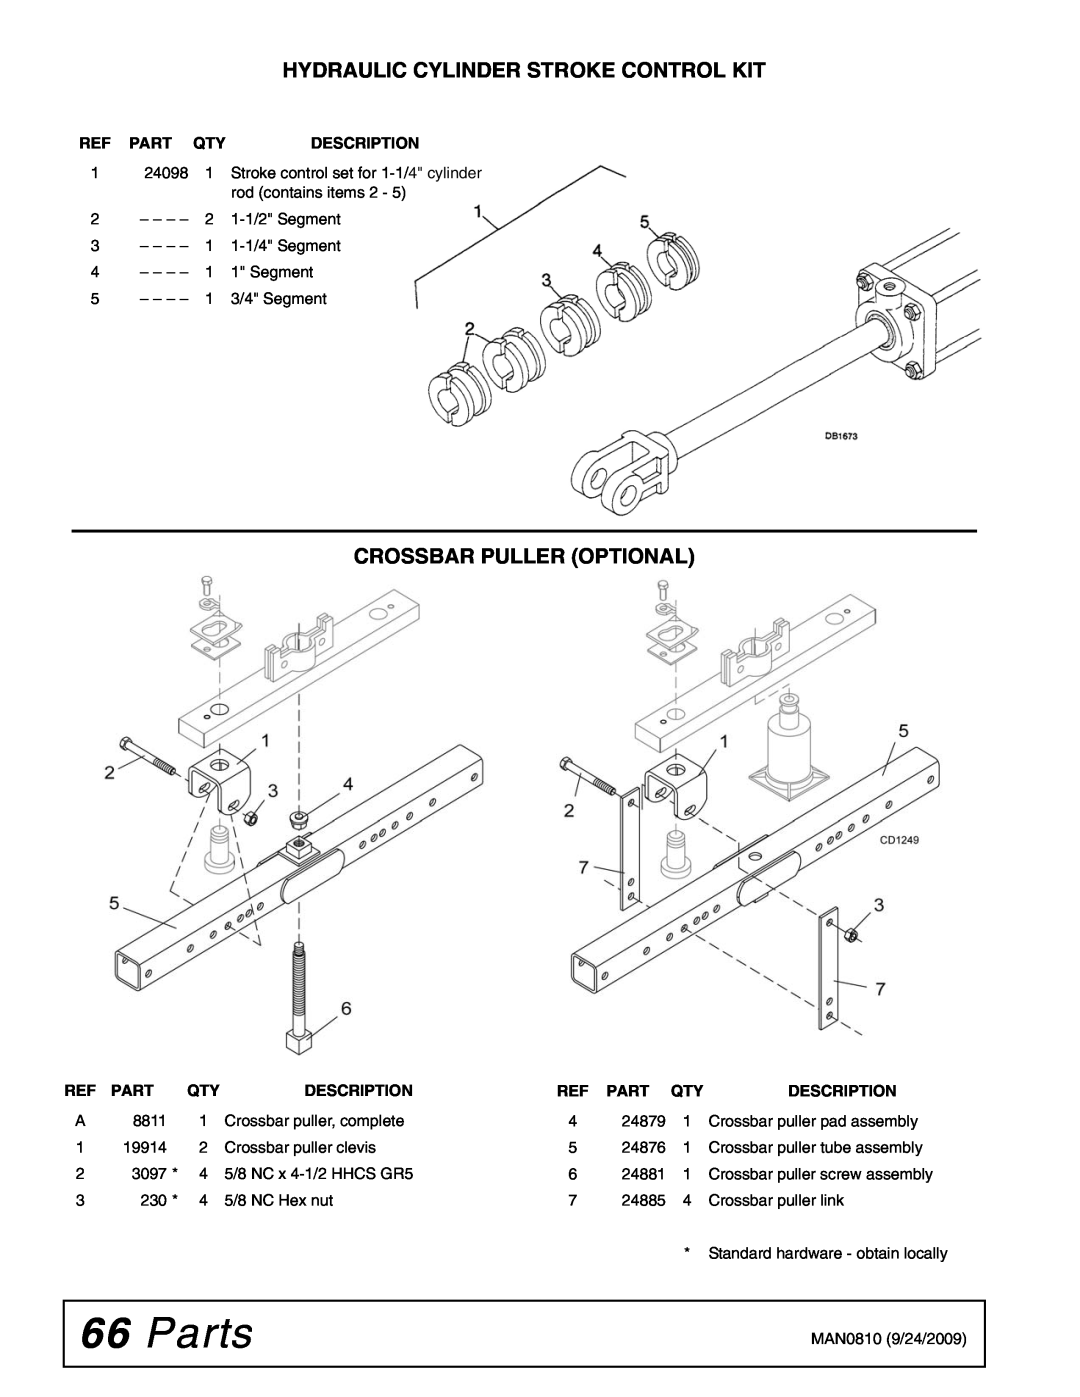 Woods Equipment BW15LH manual Parts, Hydraulic Cylinder Stroke Control Kit, Description 